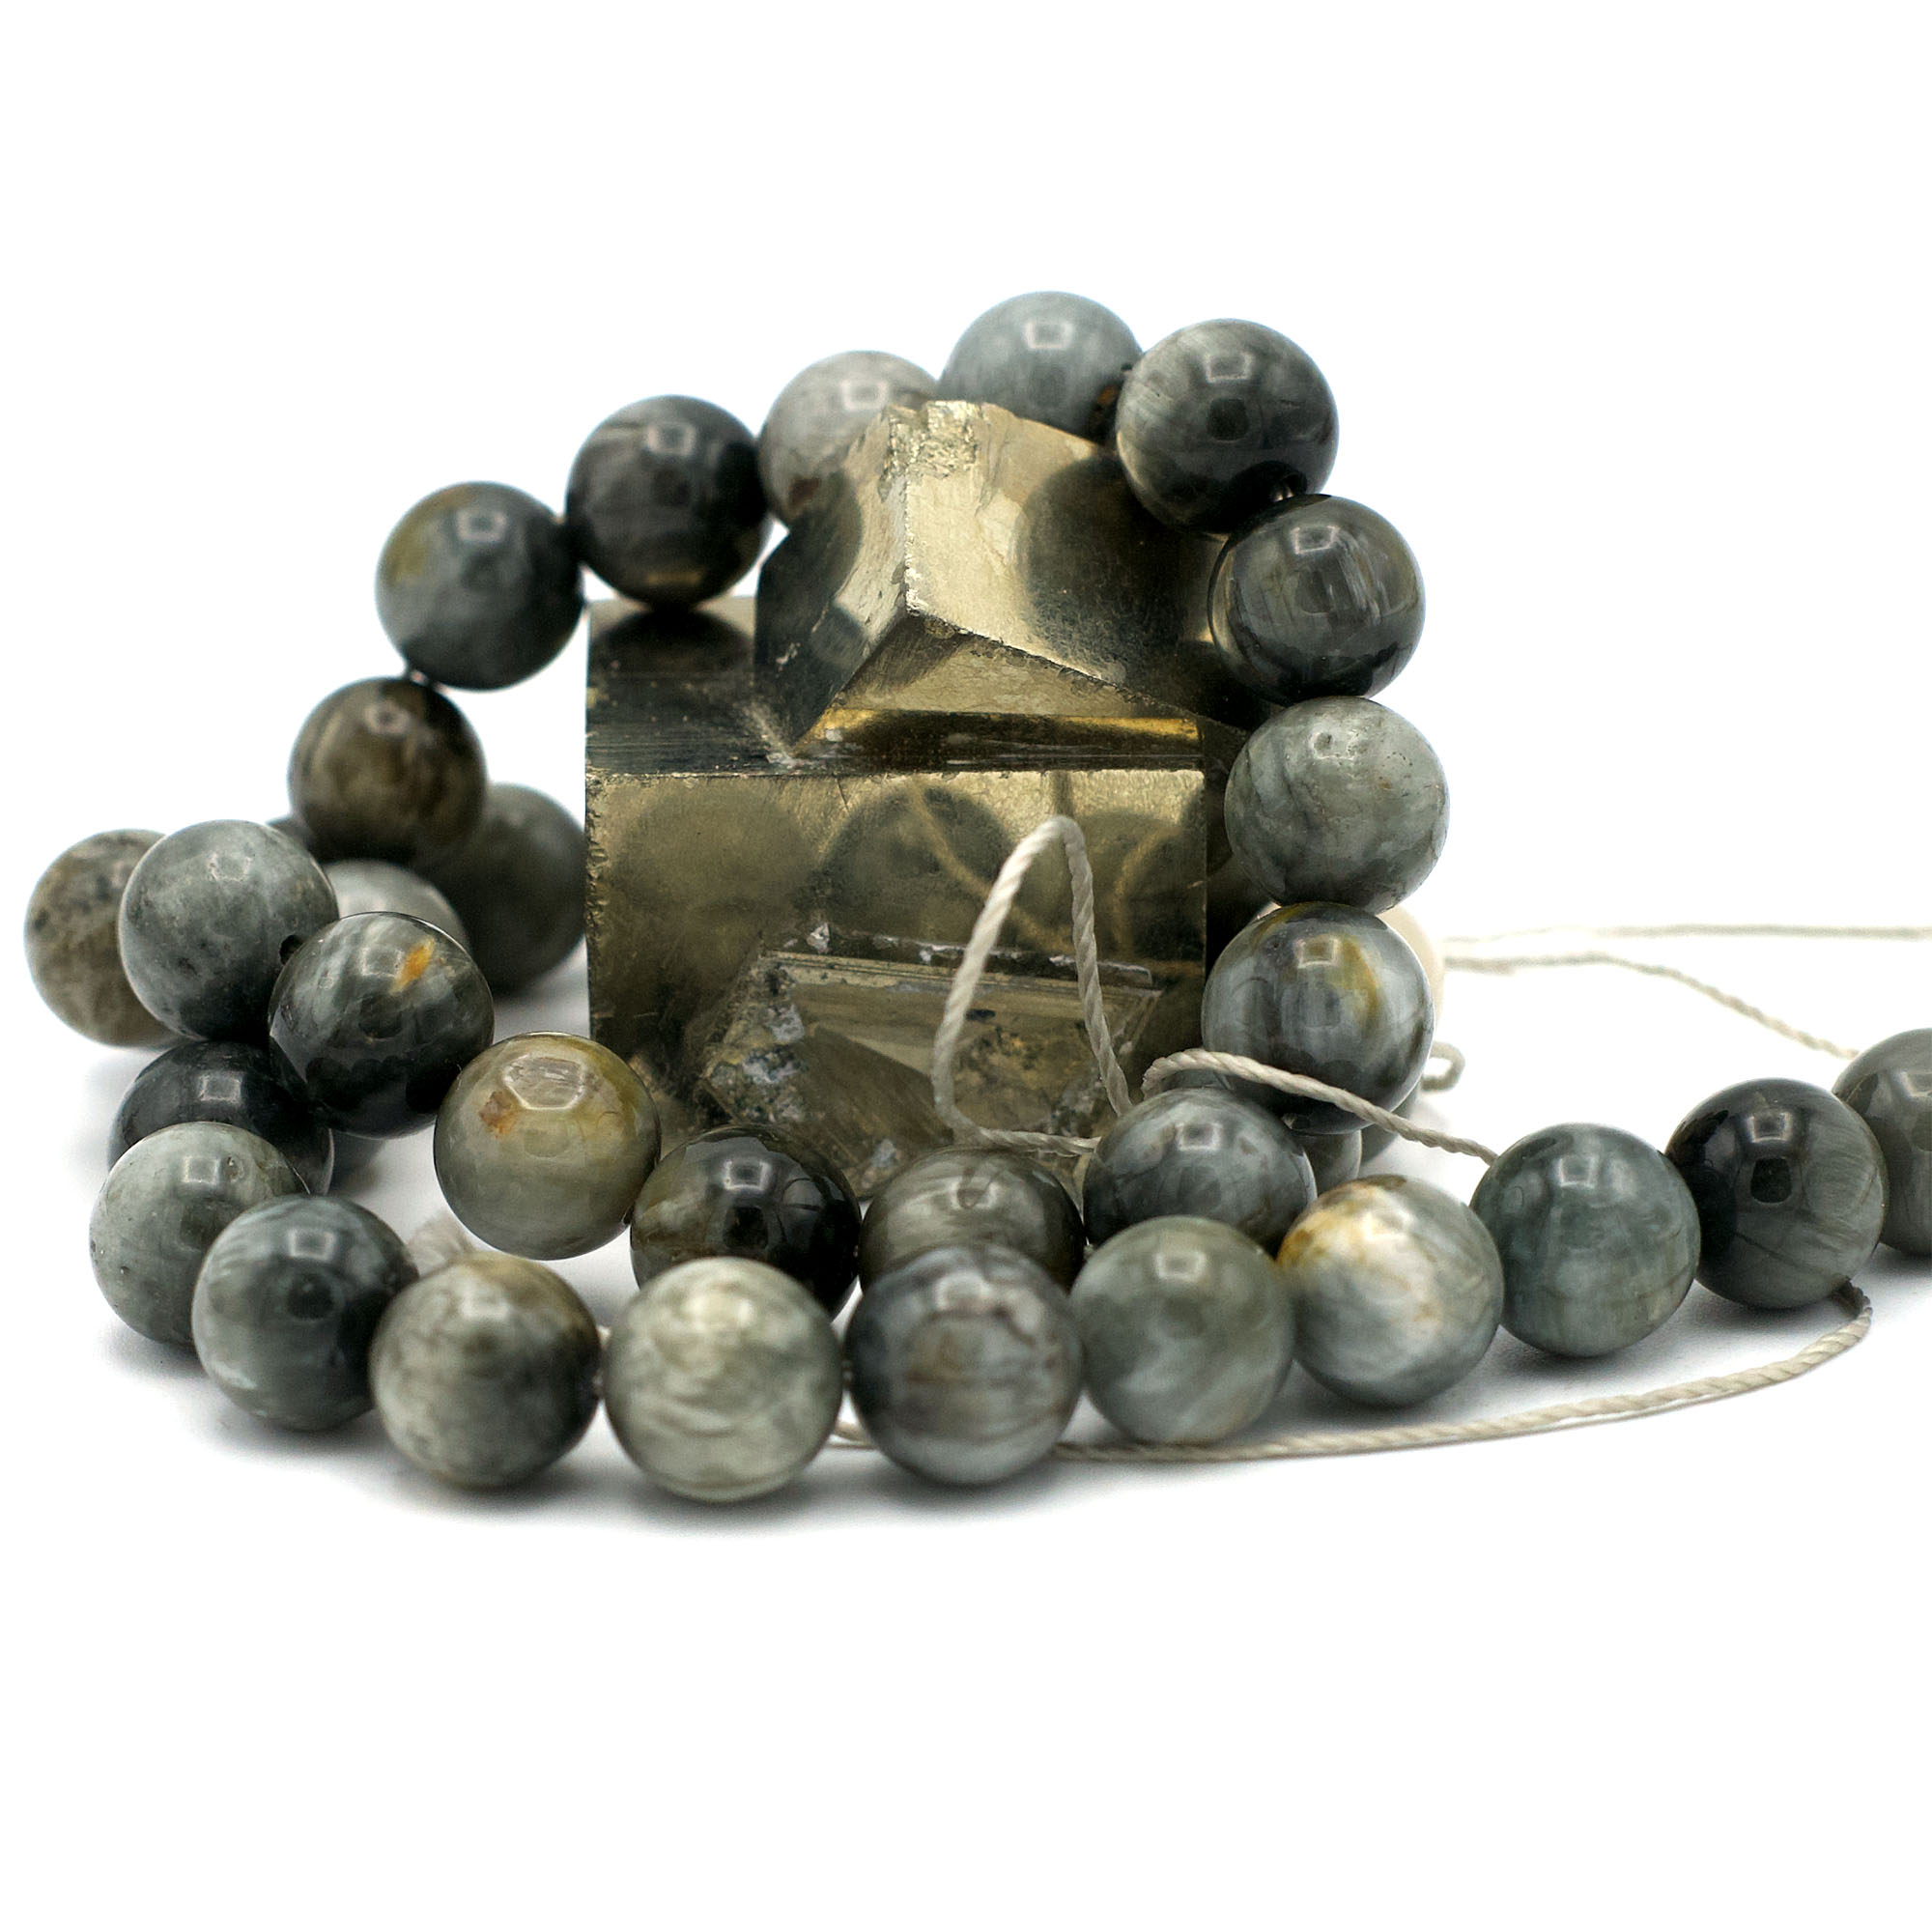 Bracelet Oeil de chat (Chrysobéryl), perles rond 10 mm - Bracelet/Oeil de  chat (Chrysobéryl) - Miracles minéraux